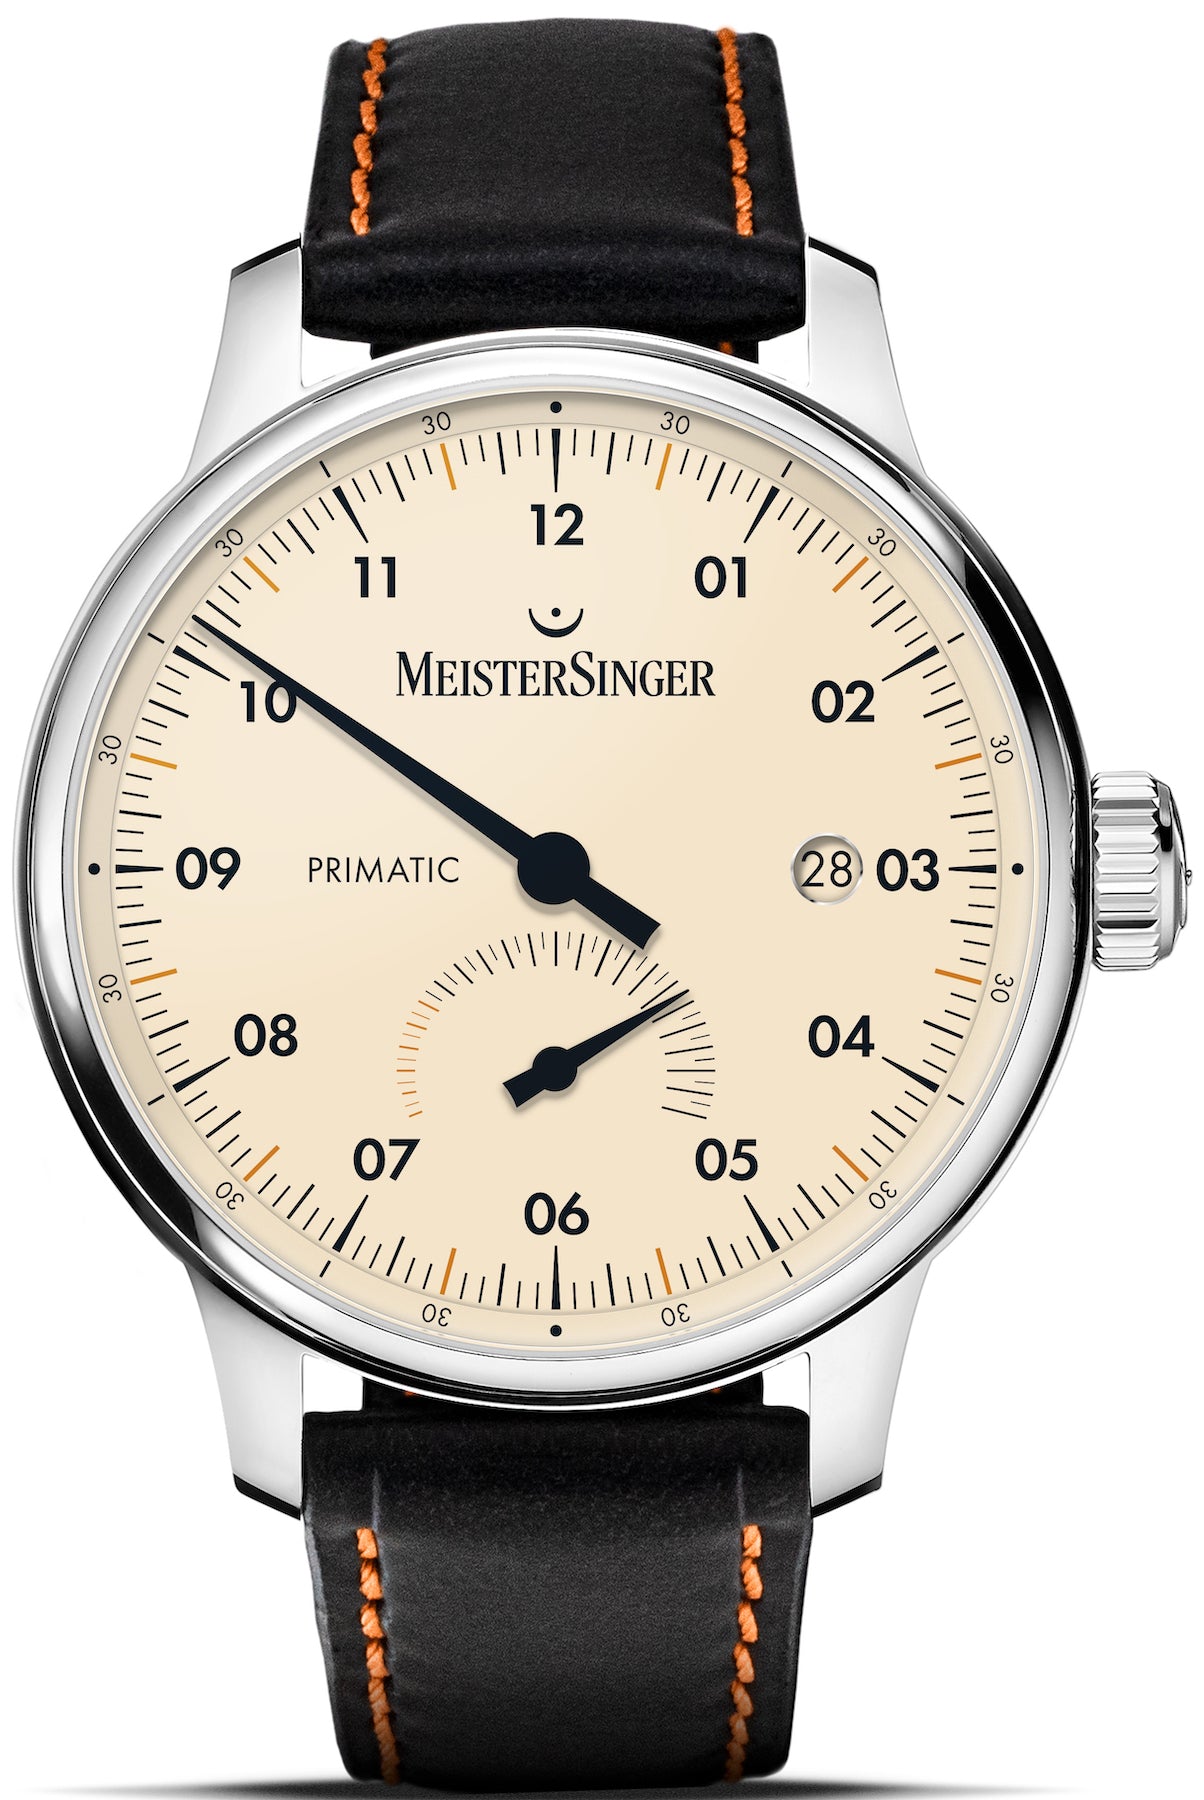 Photos - Wrist Watch MeisterSinger Watch Primatic - Cream MS-366 